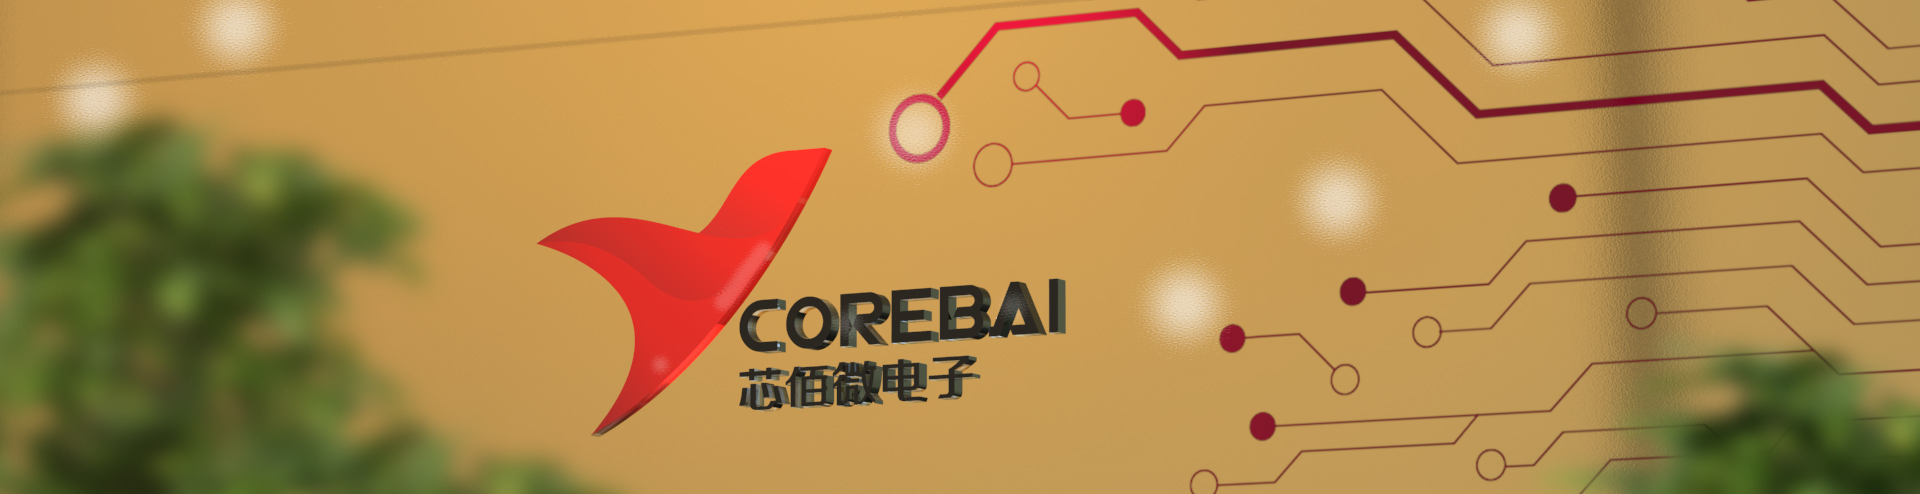 About Corebai